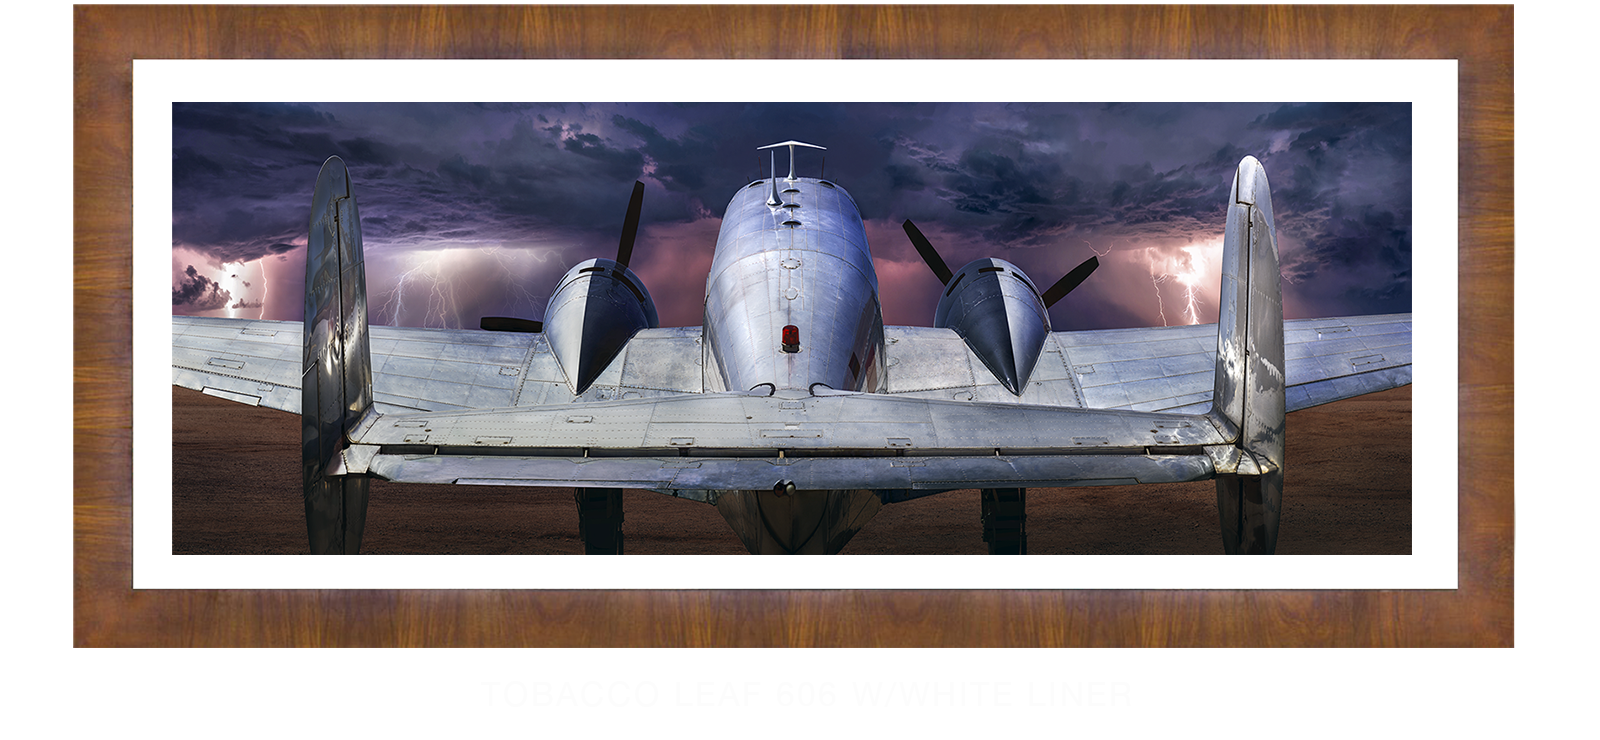 24DOYEN REIGN Tobacco Leaf 606 w_Wht Liner T